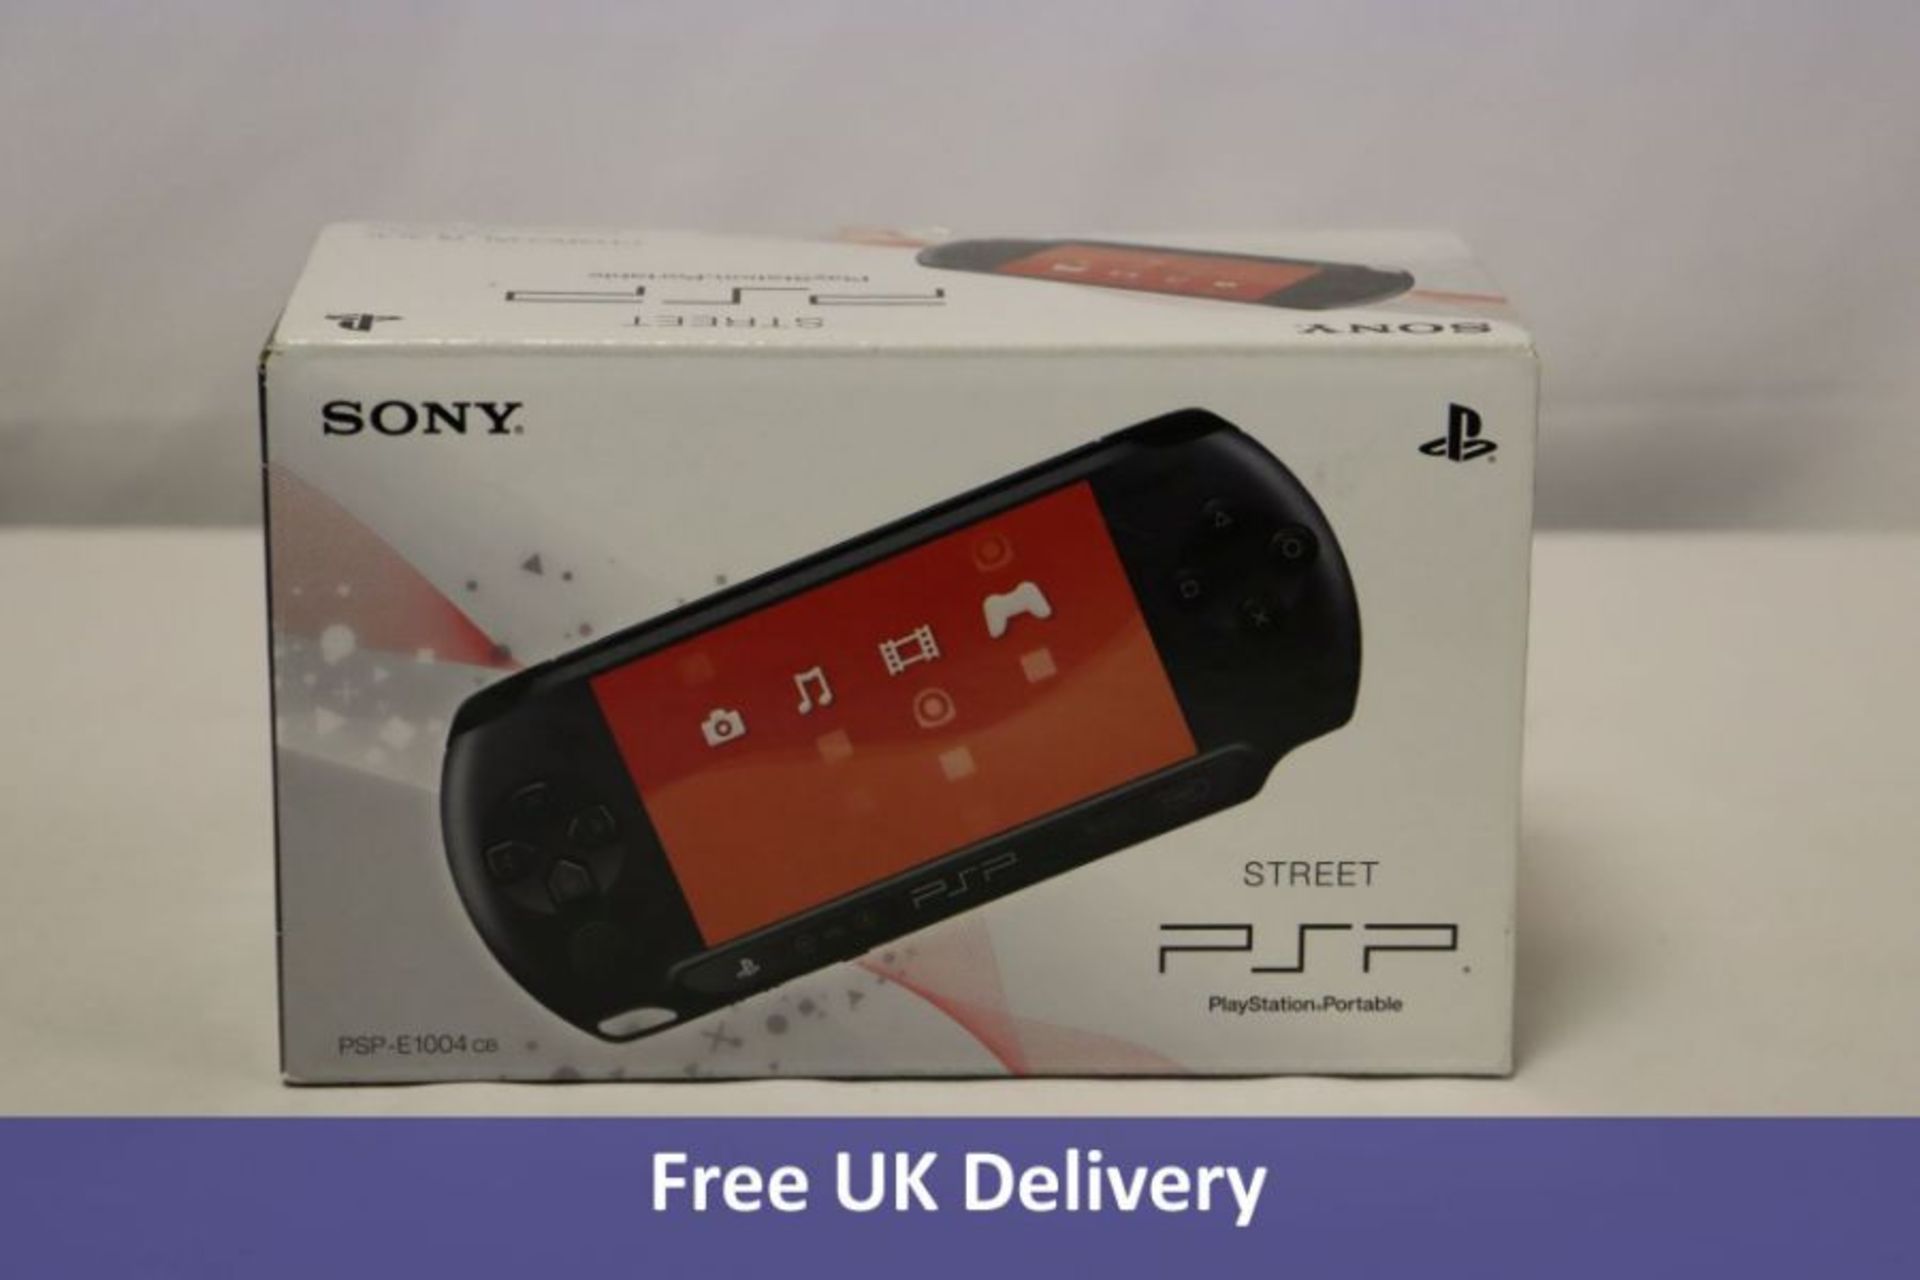 Sony PSP E1004 Street, Black. Used, not tested